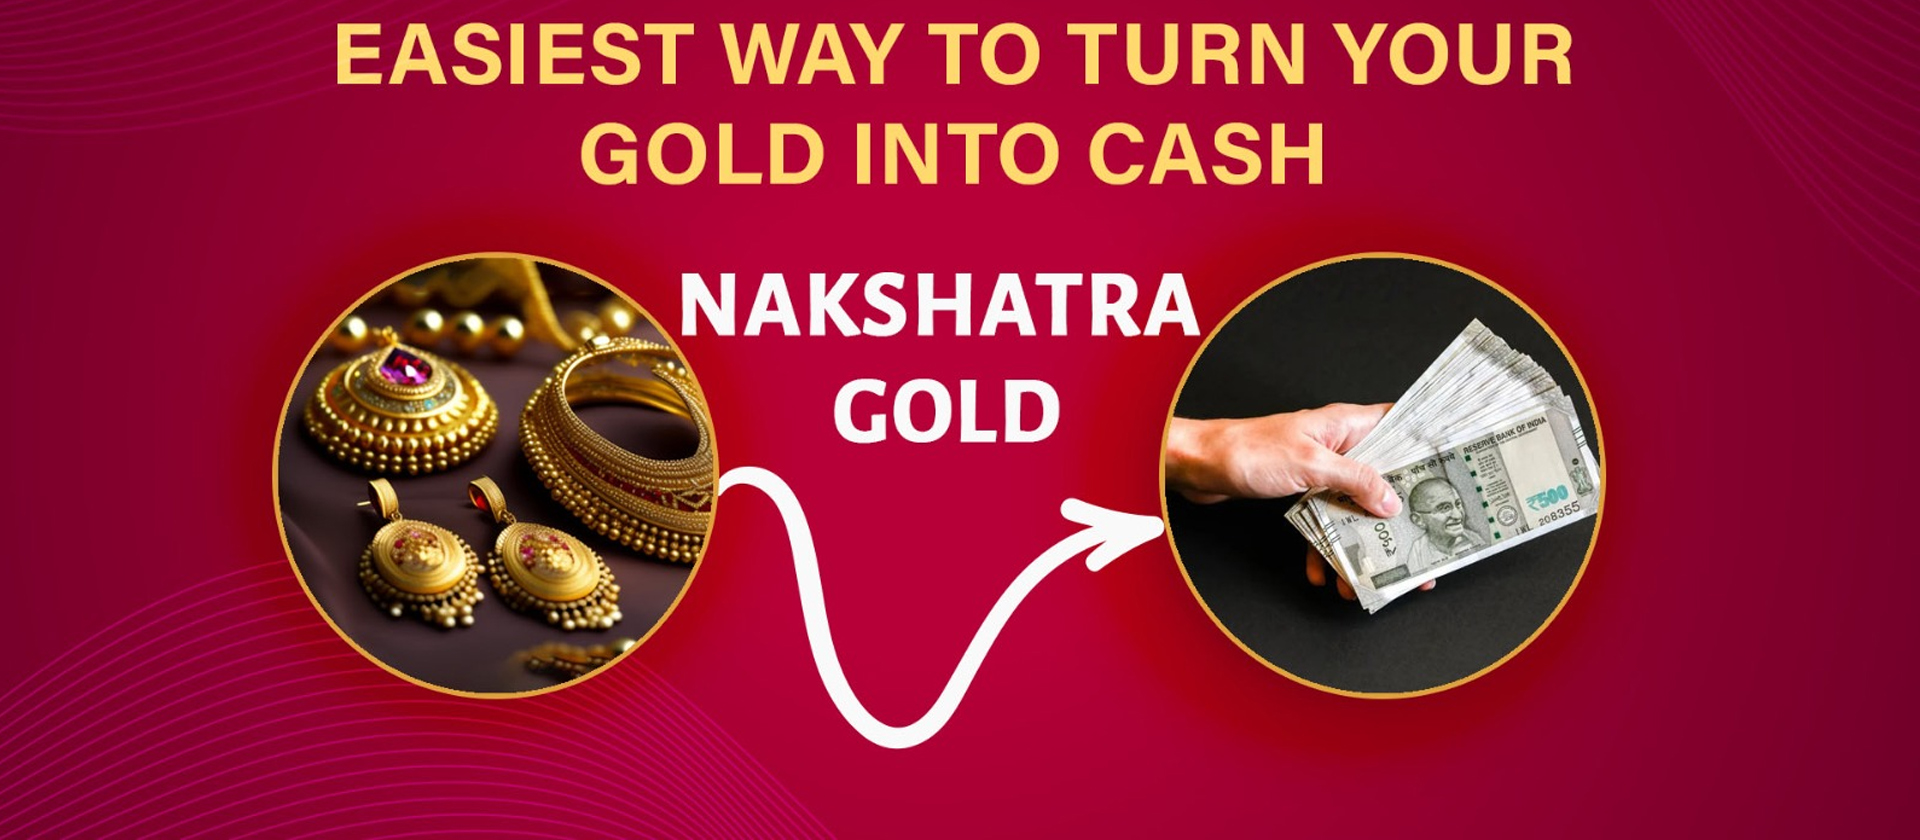 Best gold buyers in Chennai